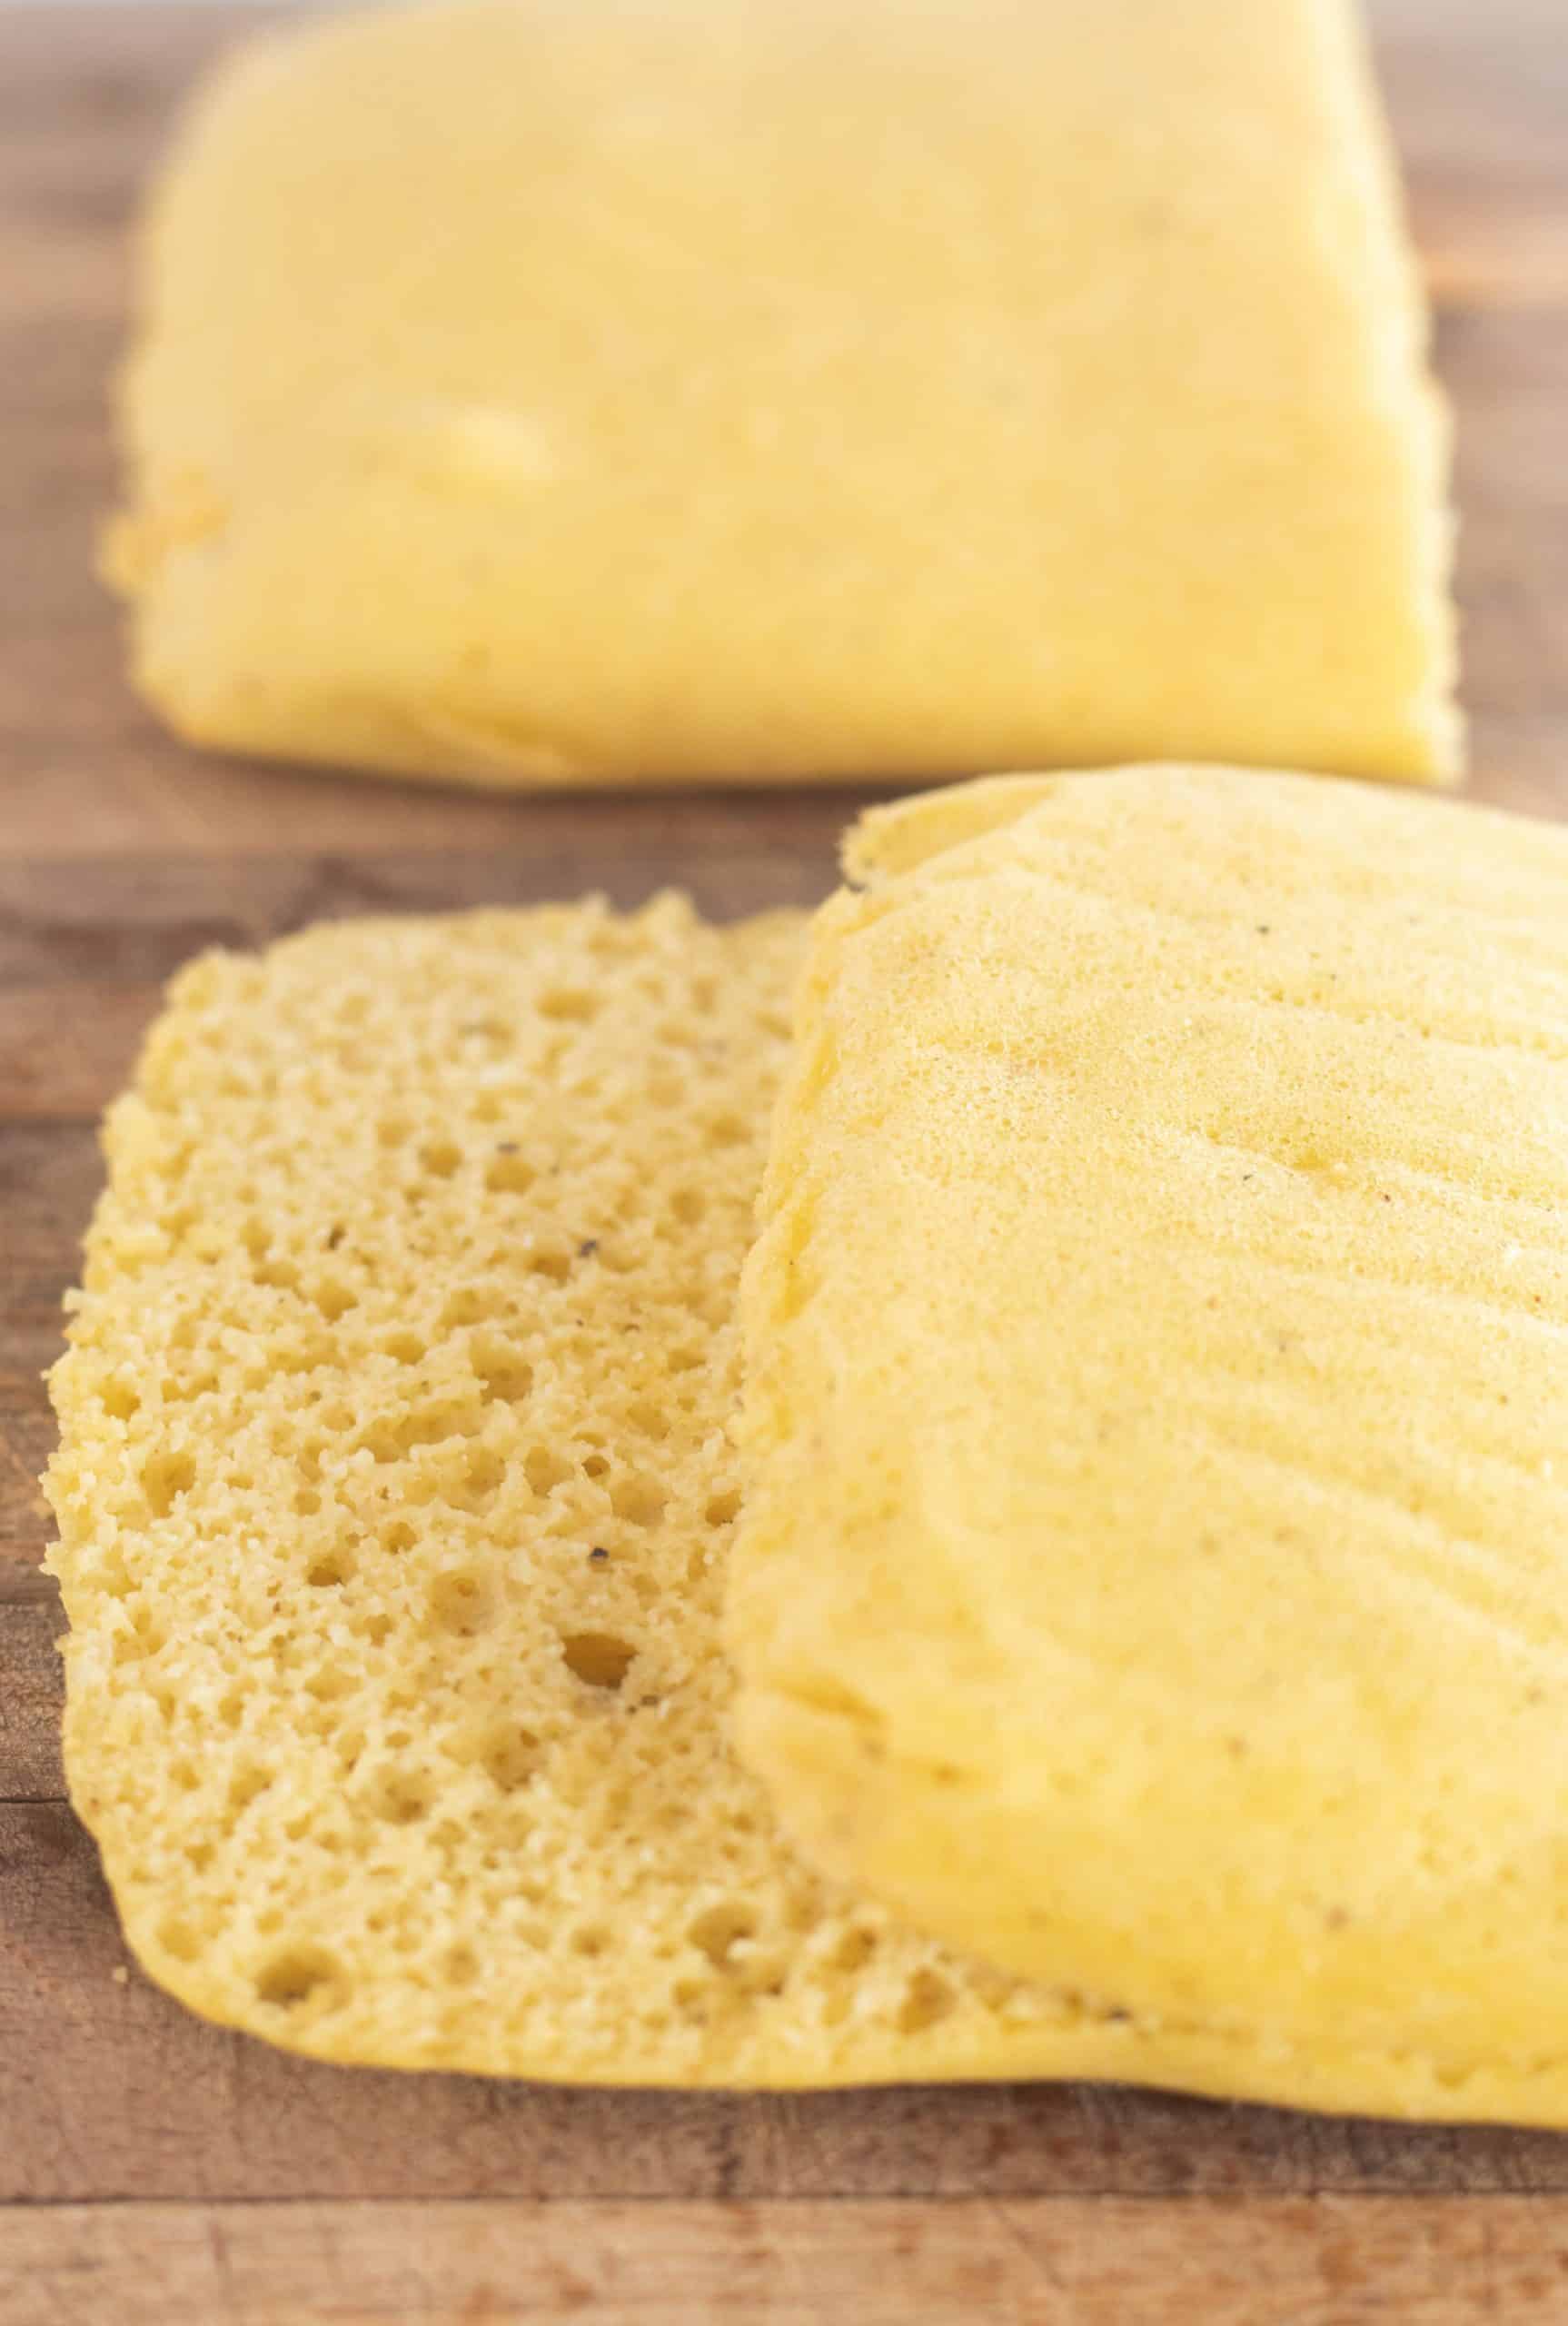 close up the bread cut into sandwich slices.